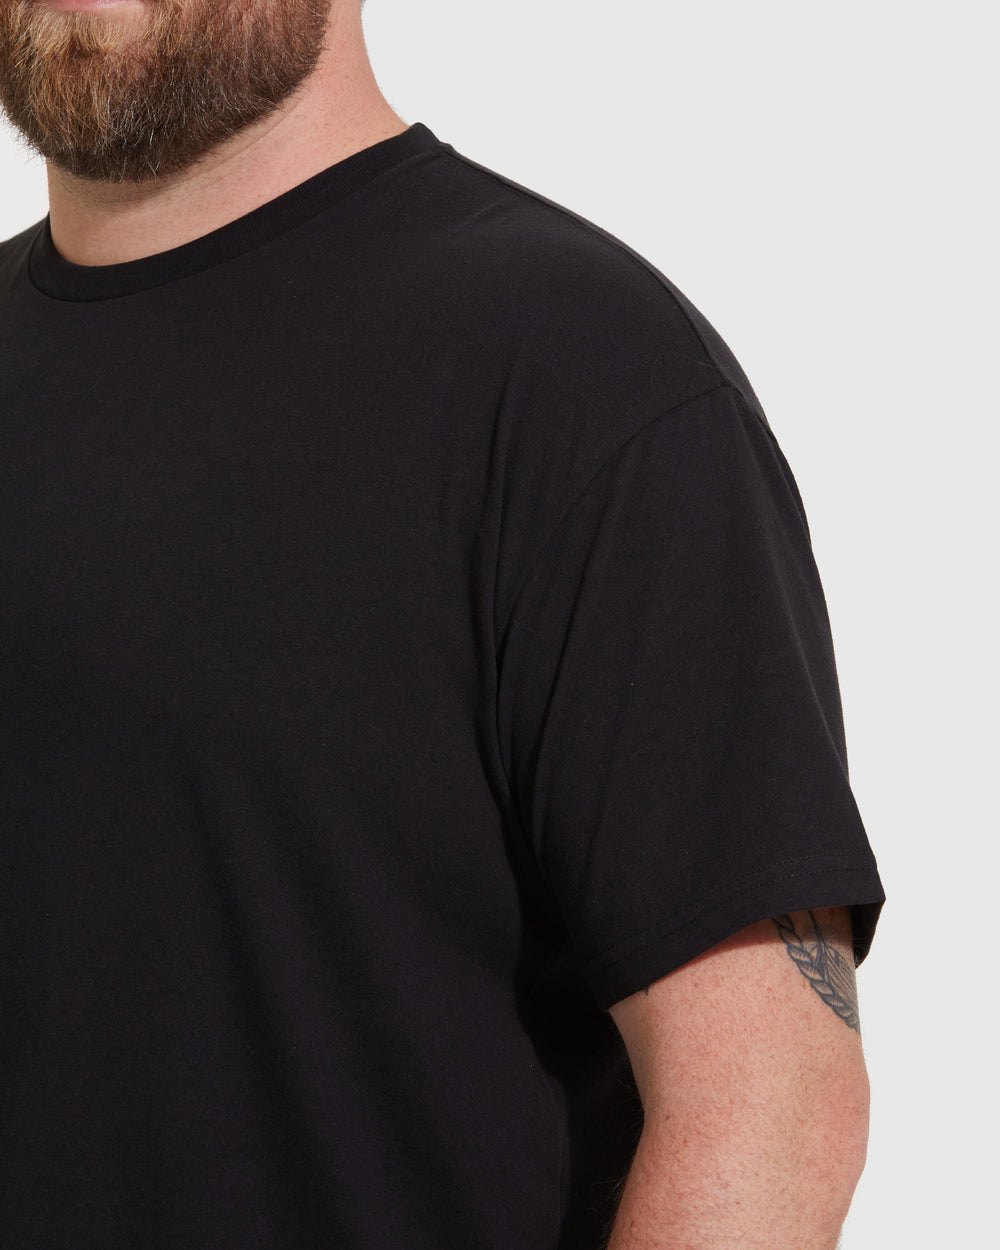 Tits Mens Small T-Shirt Black Graphic Tee MobShit Short Sleeve